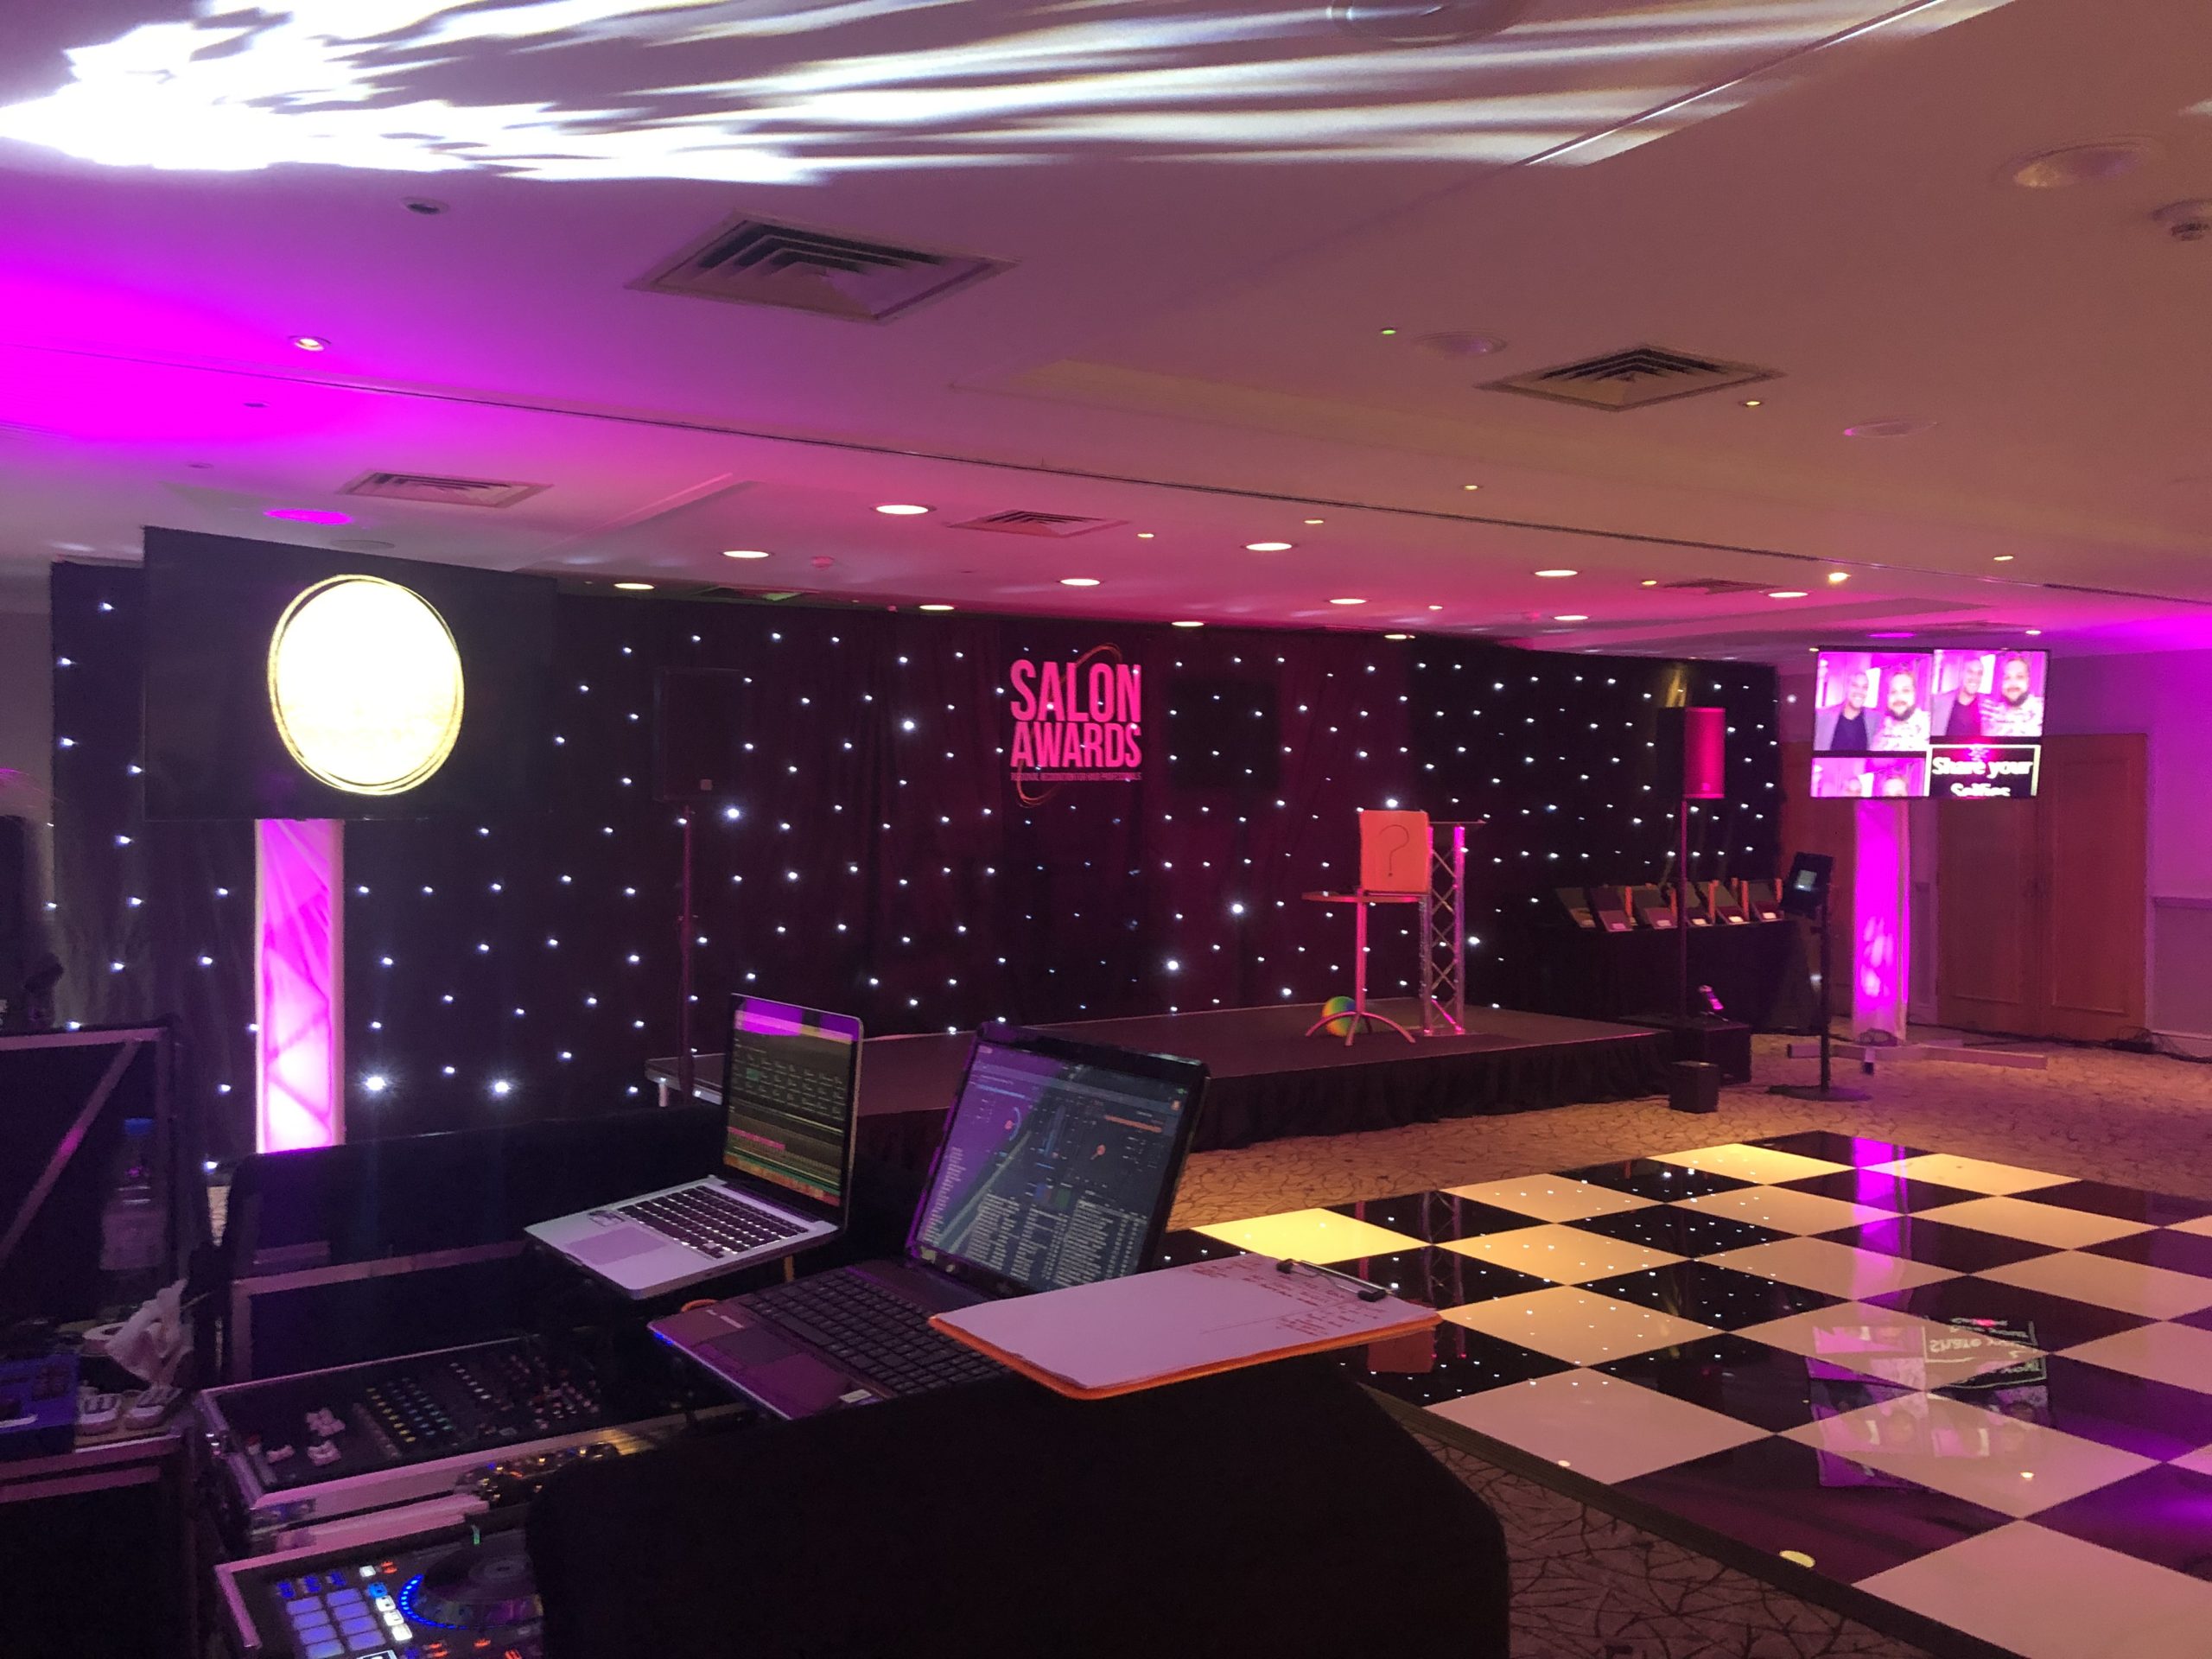 Event Production setup for Salon Awards 2019 at Hilton Hotel, Cobham, Surrey